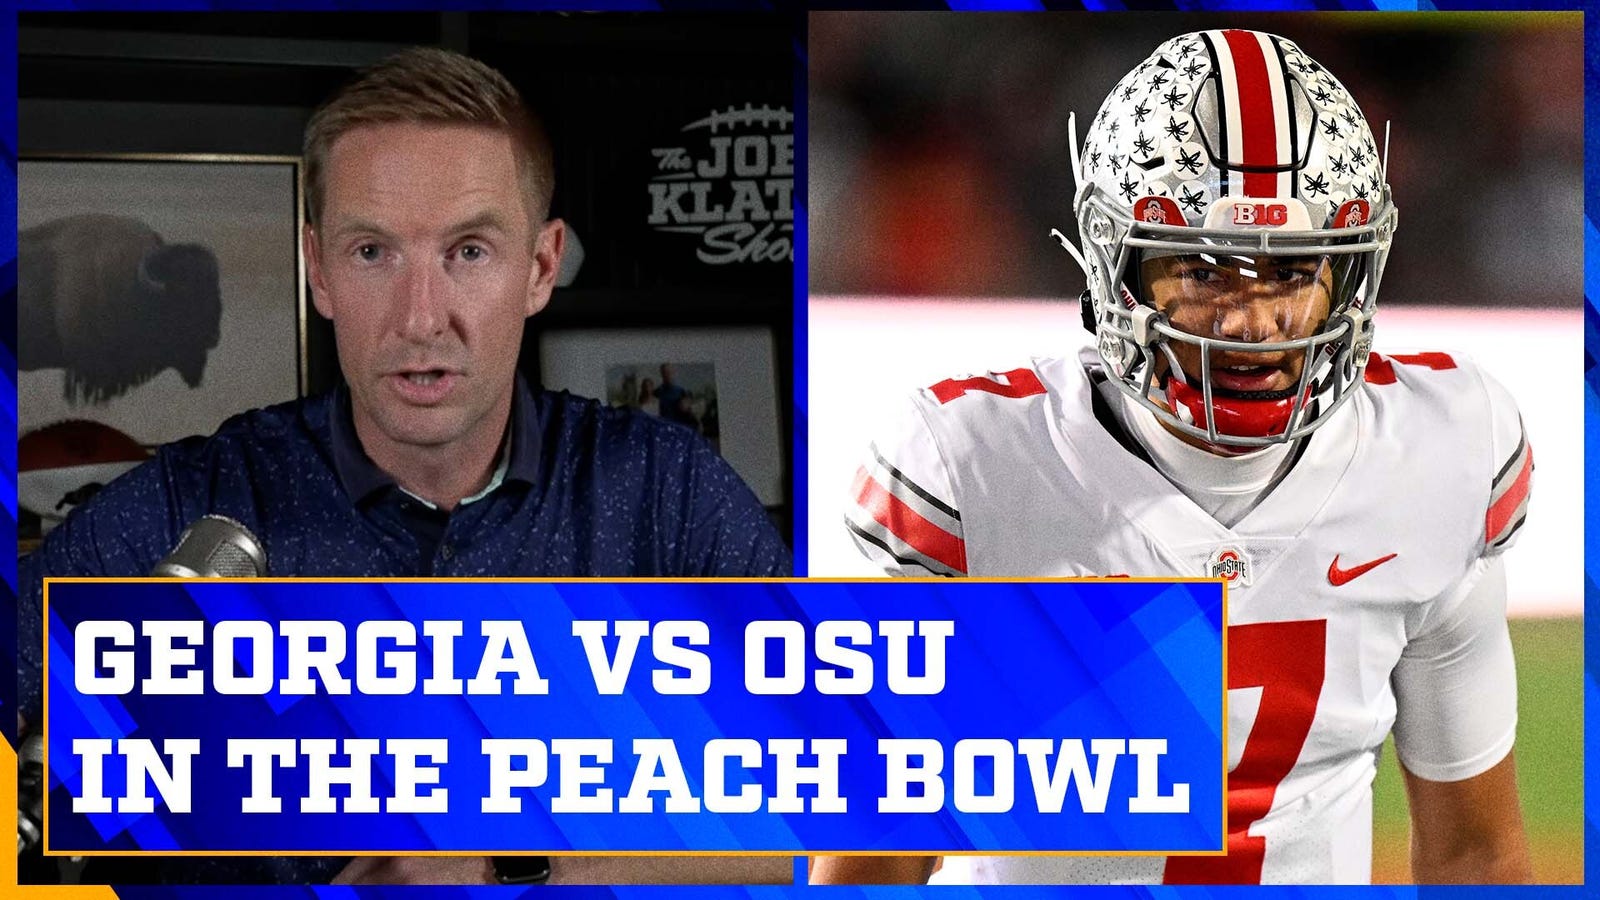 Georgia and Ohio State face off in Peach Bowl